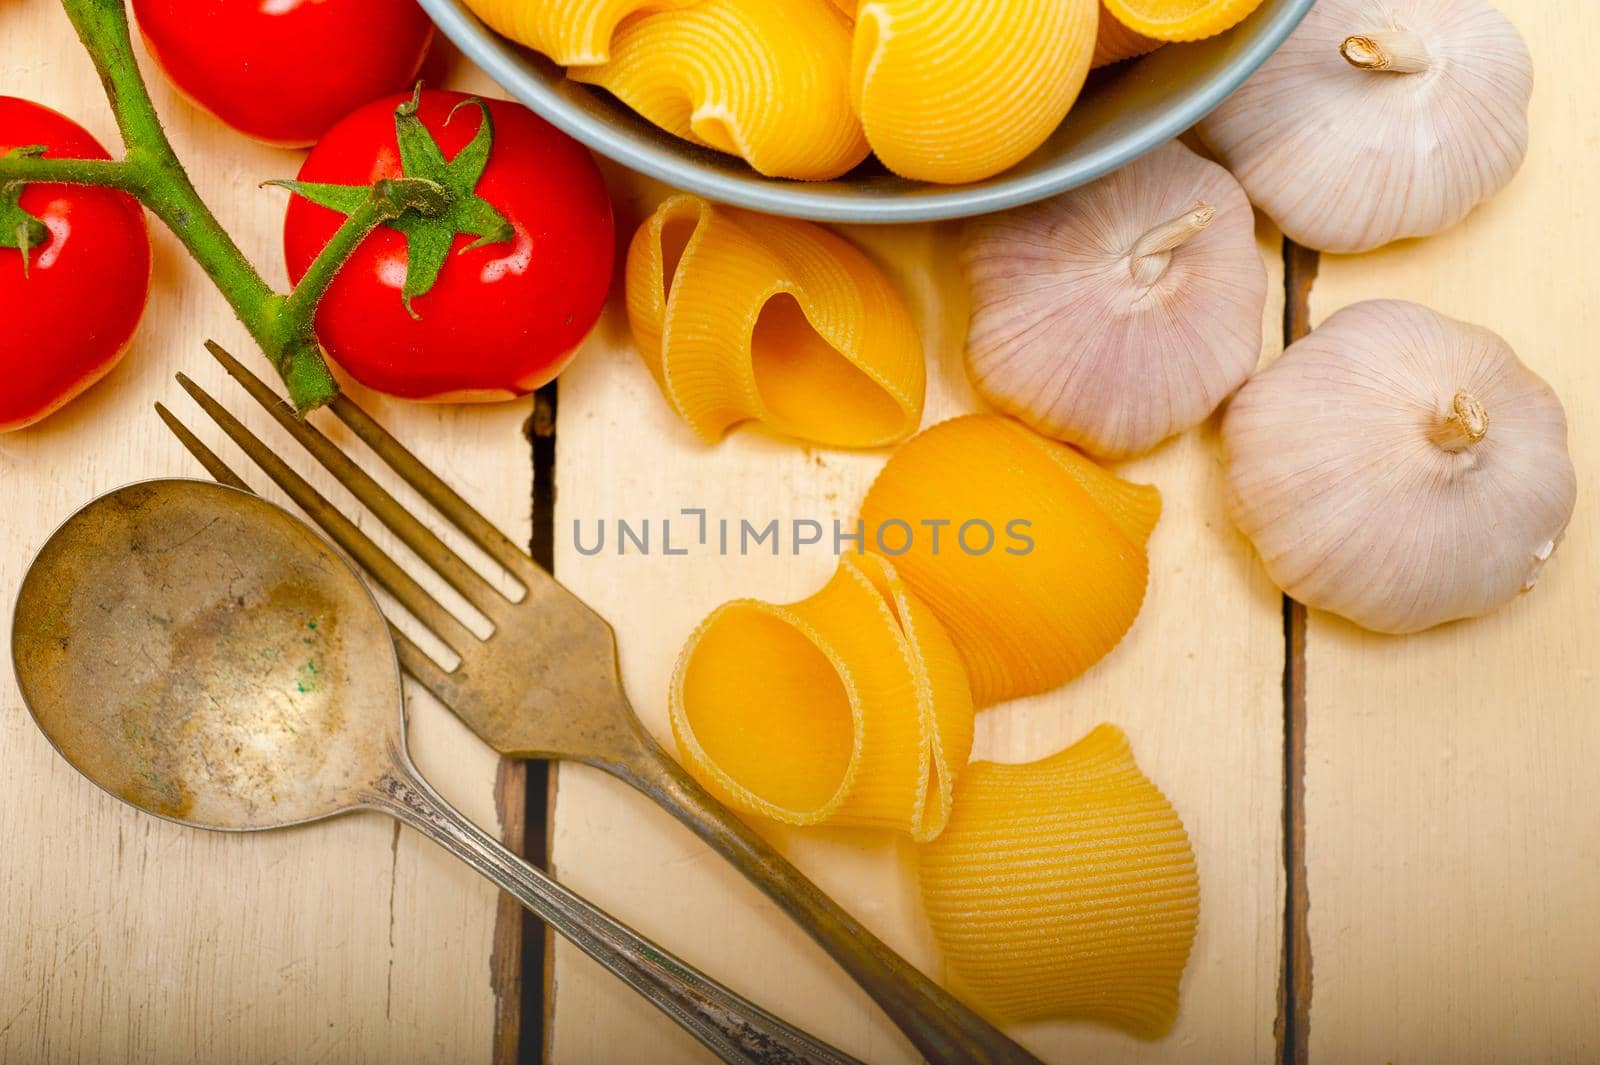 Italian snail lumaconi pasta with tomatoes by keko64